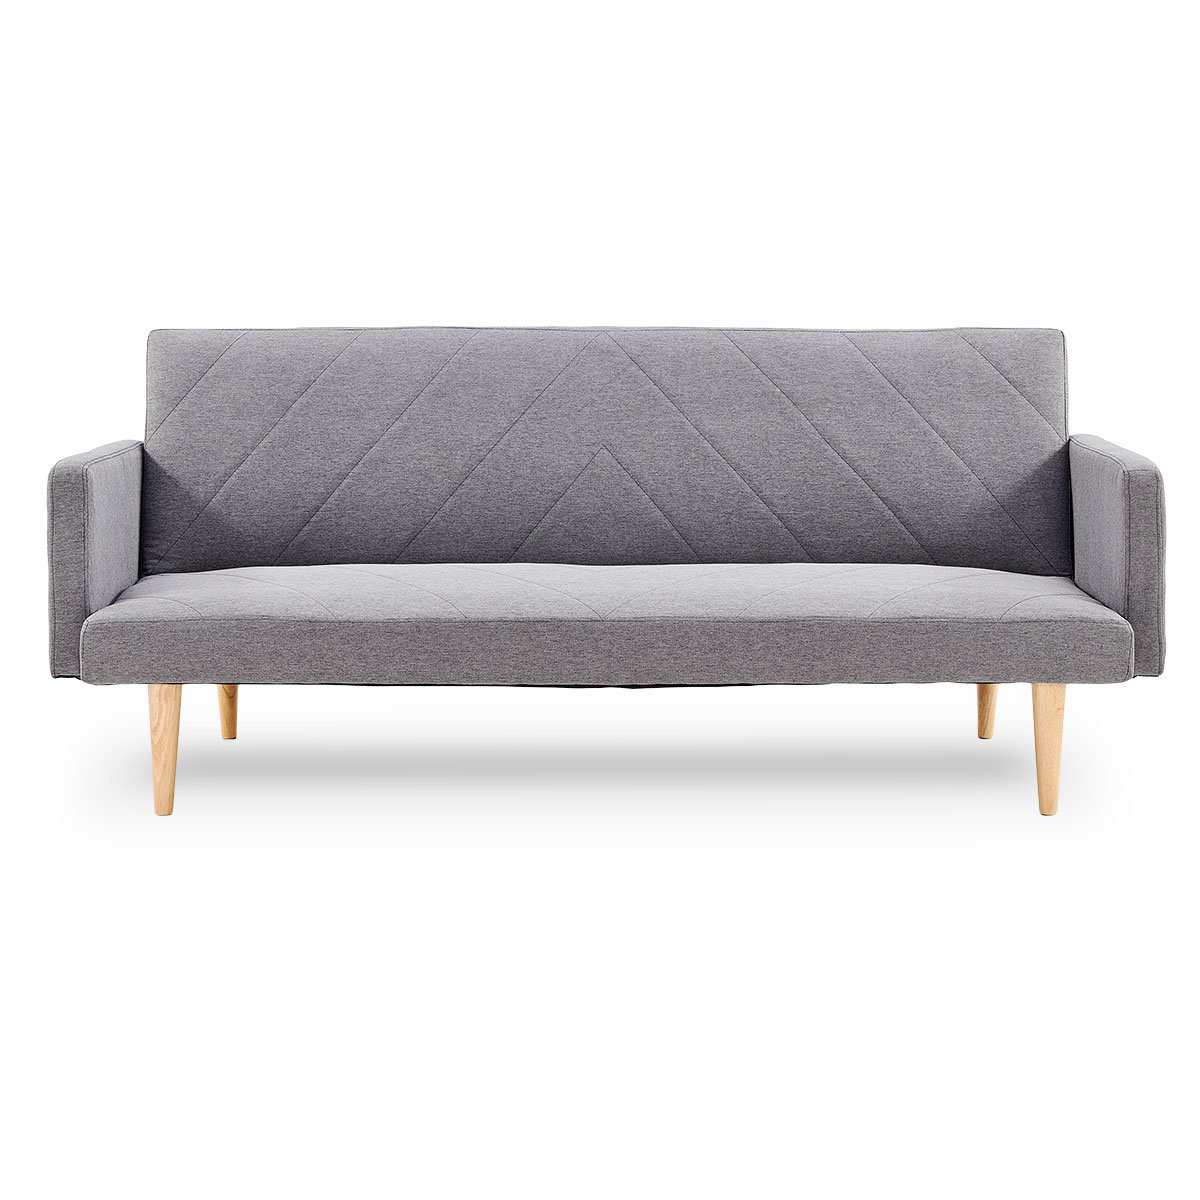 Sarantino 3 Seater Modular Linen Fabric Sofa Bed Couch Light Grey 1